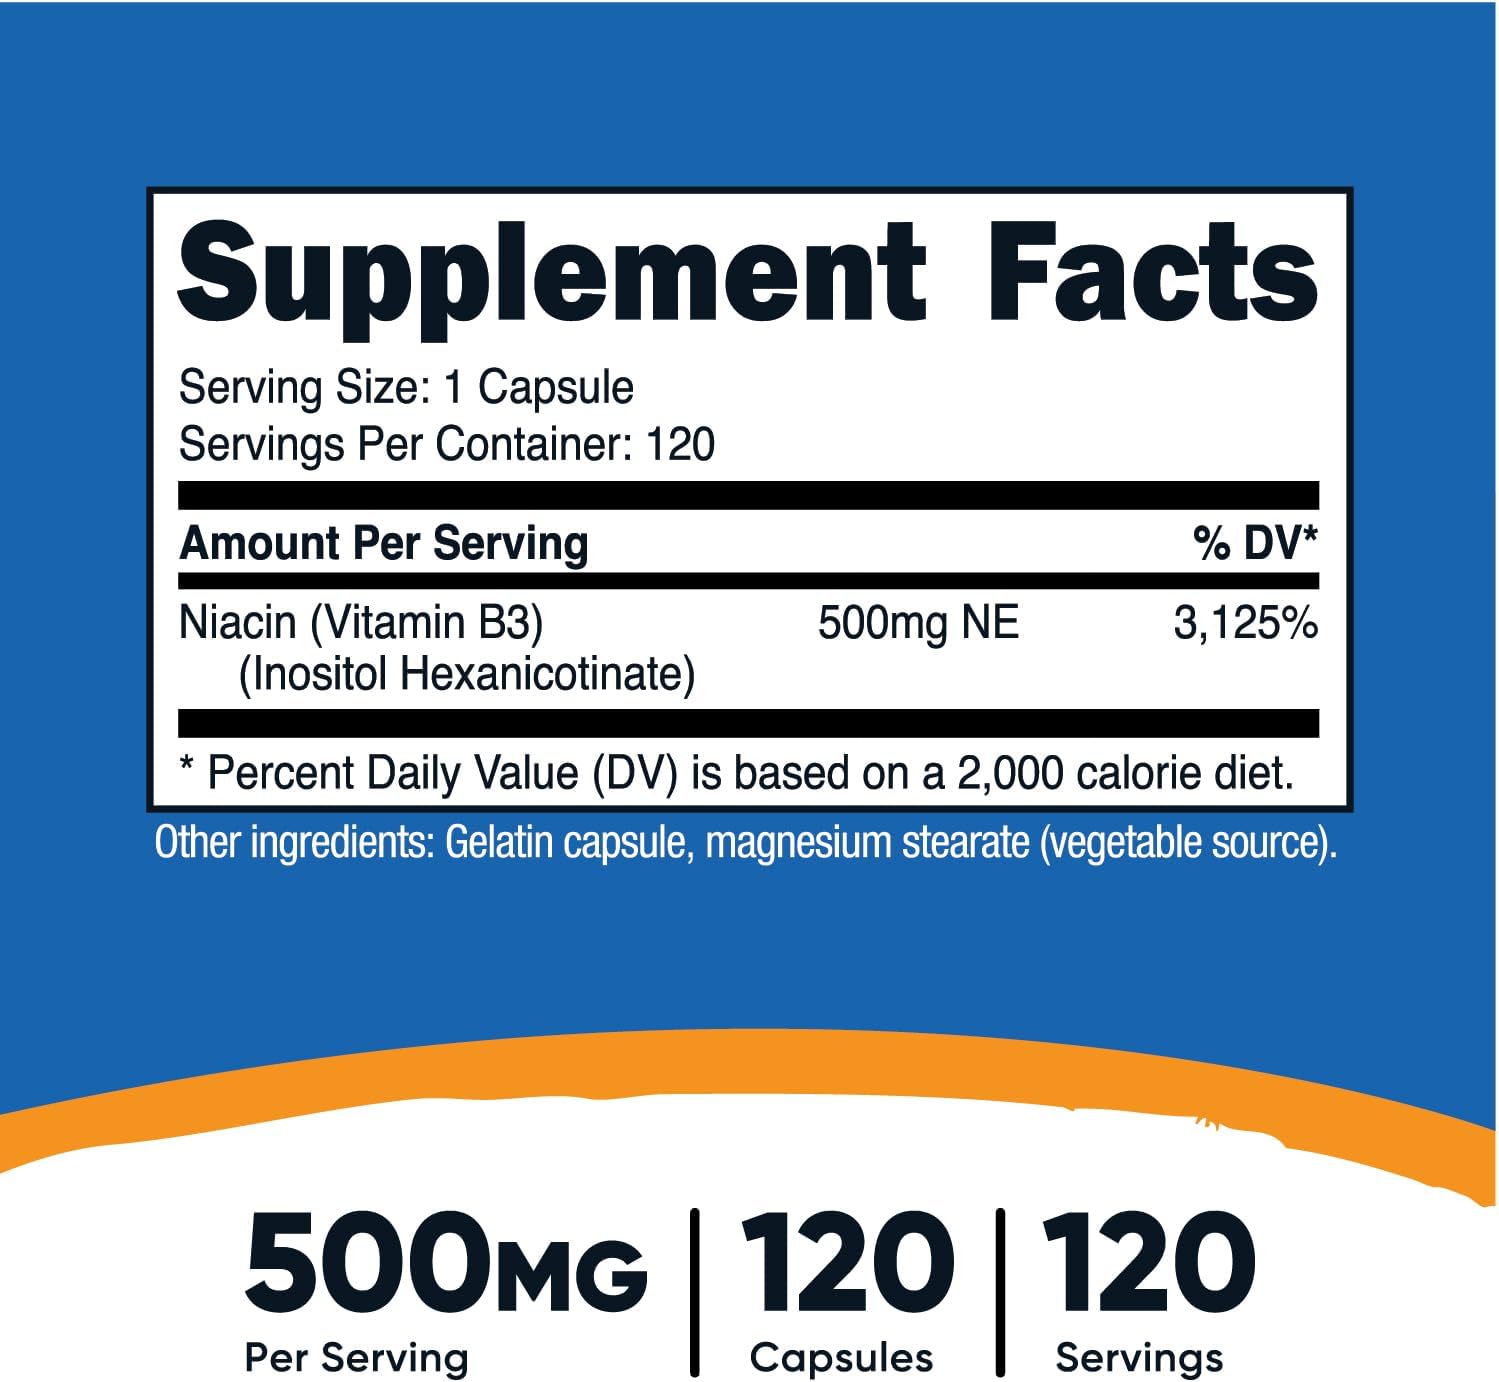 Nutricost Niacin (Flush-Free) Inositol Hexanicotinate 500mg, 120 Capsules, Vitamin B3